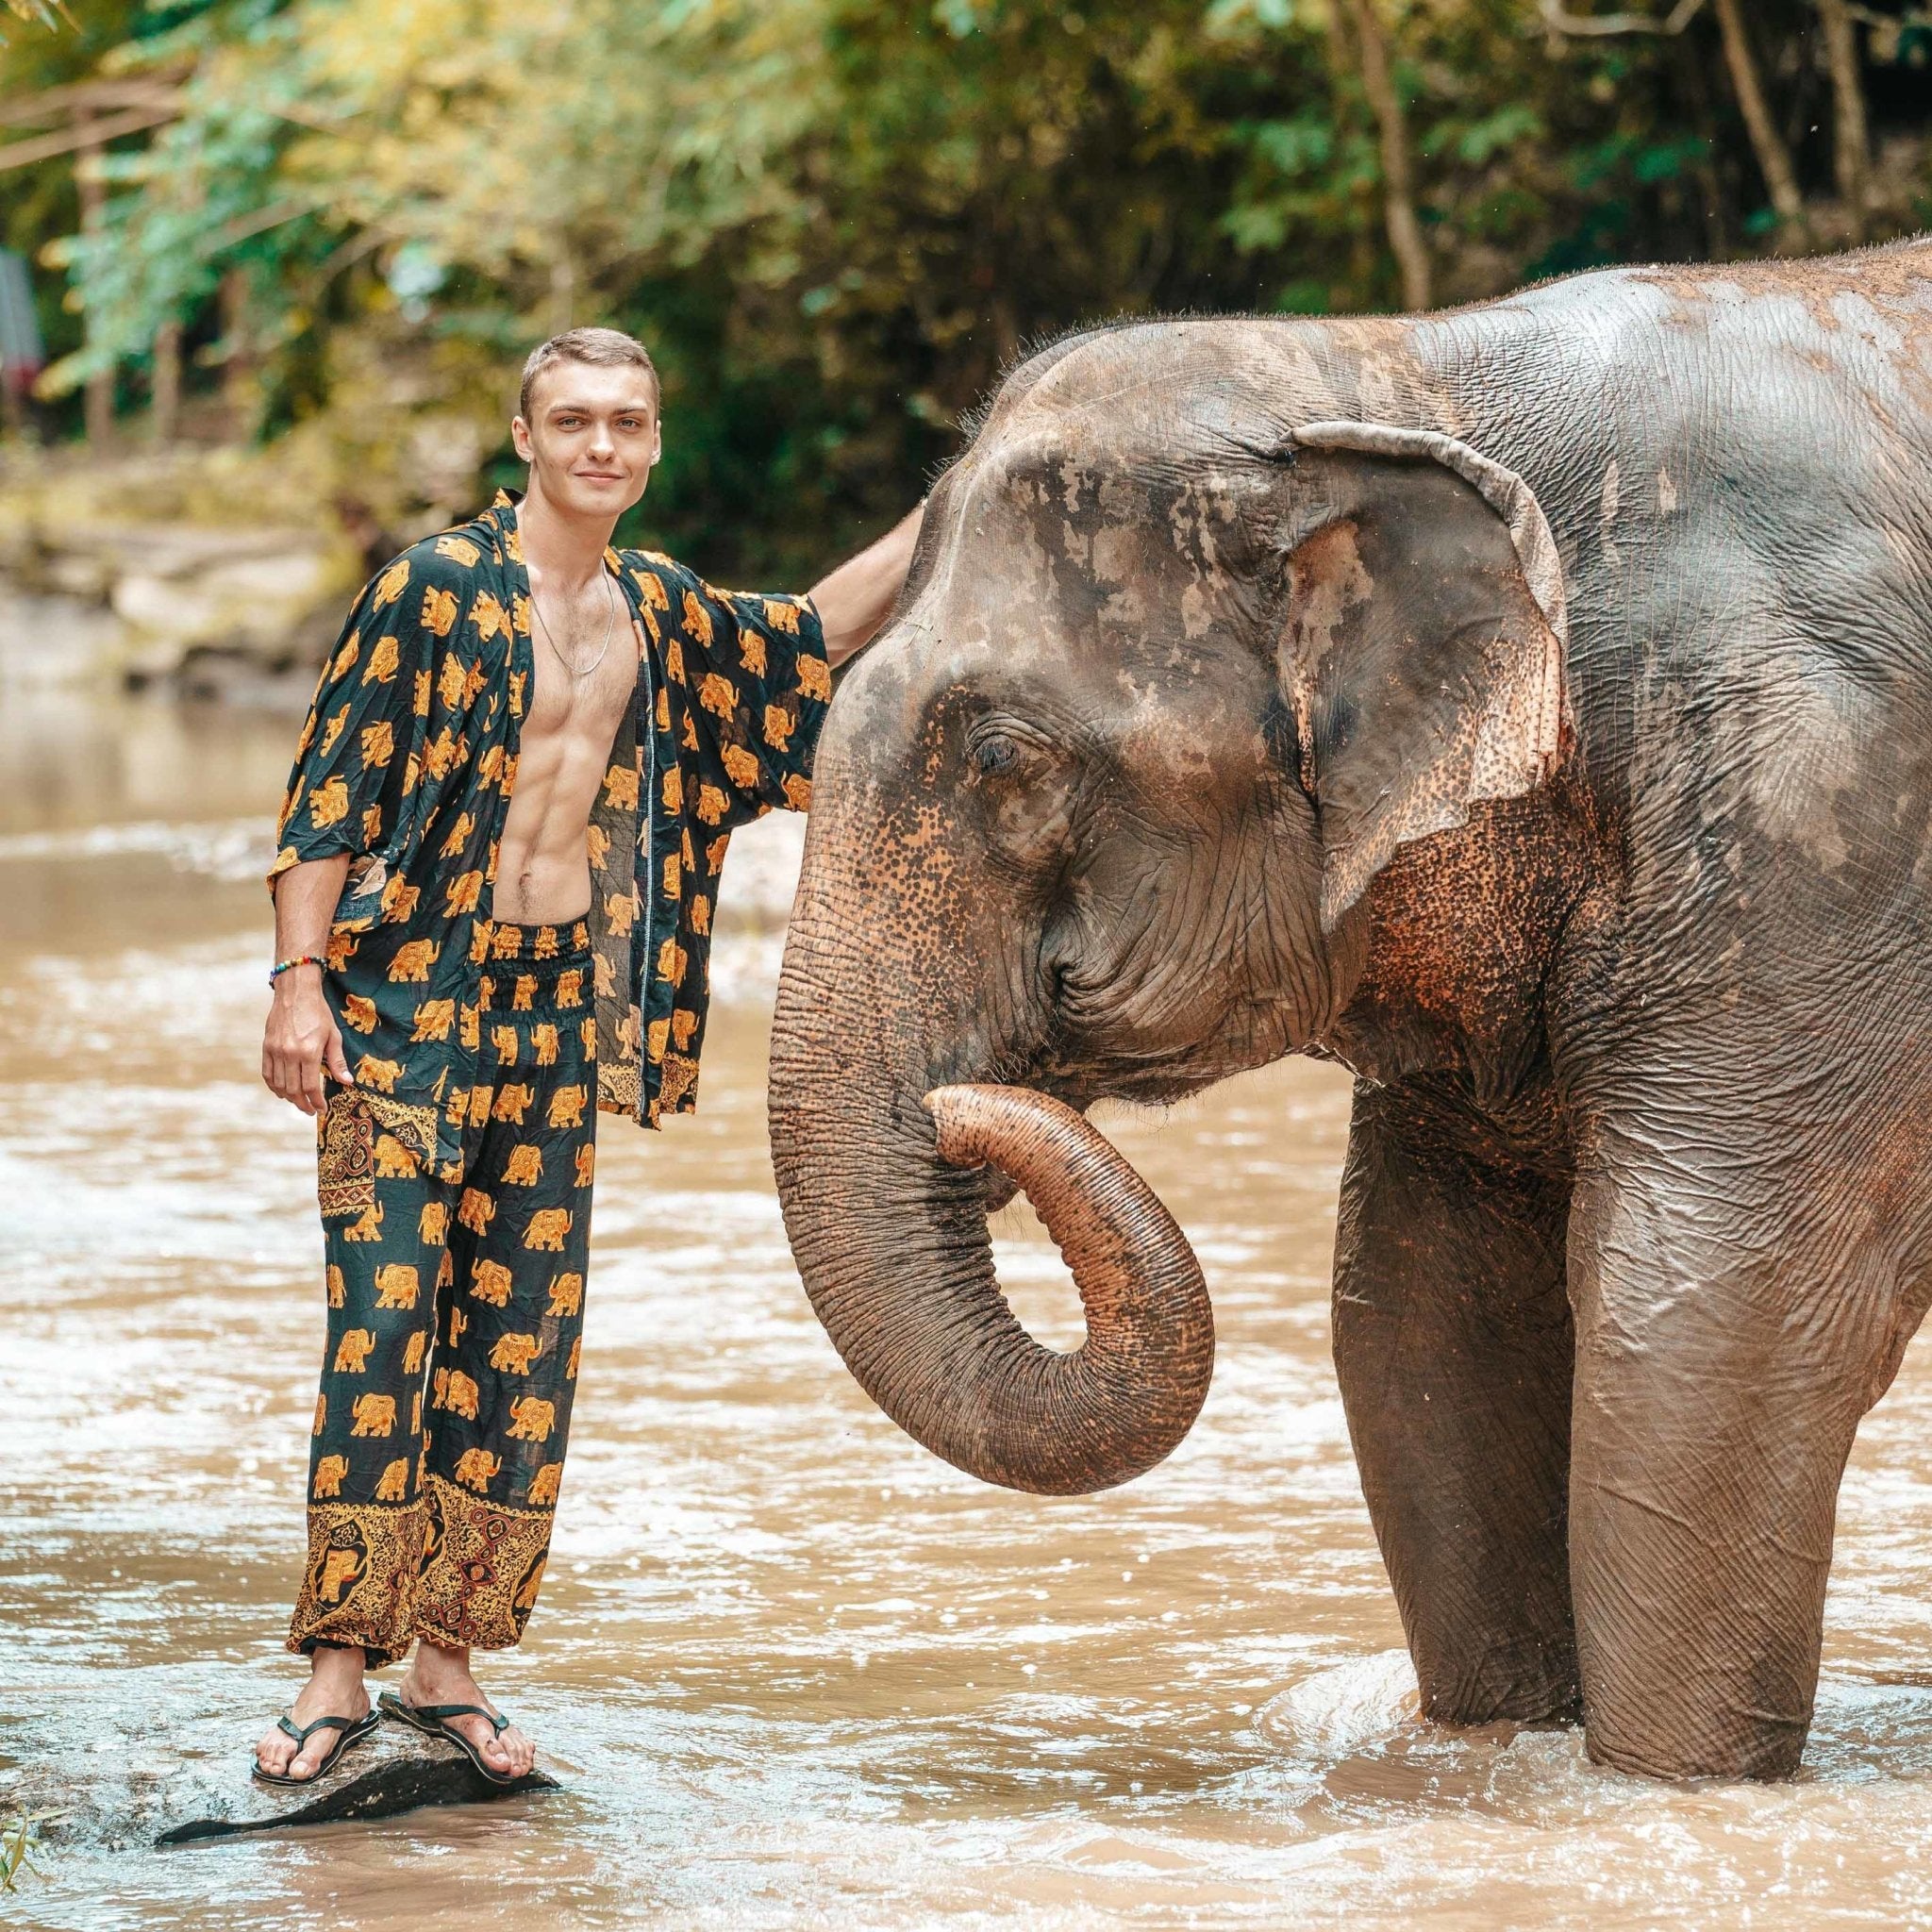 SAVANNA PANTS - Drawstring Elepanta Drawstring Pants - Buy Today Elephant Pants Jewelry And Bohemian Clothes Handmade In Thailand Help To Save The Elephants FairTrade And Vegan